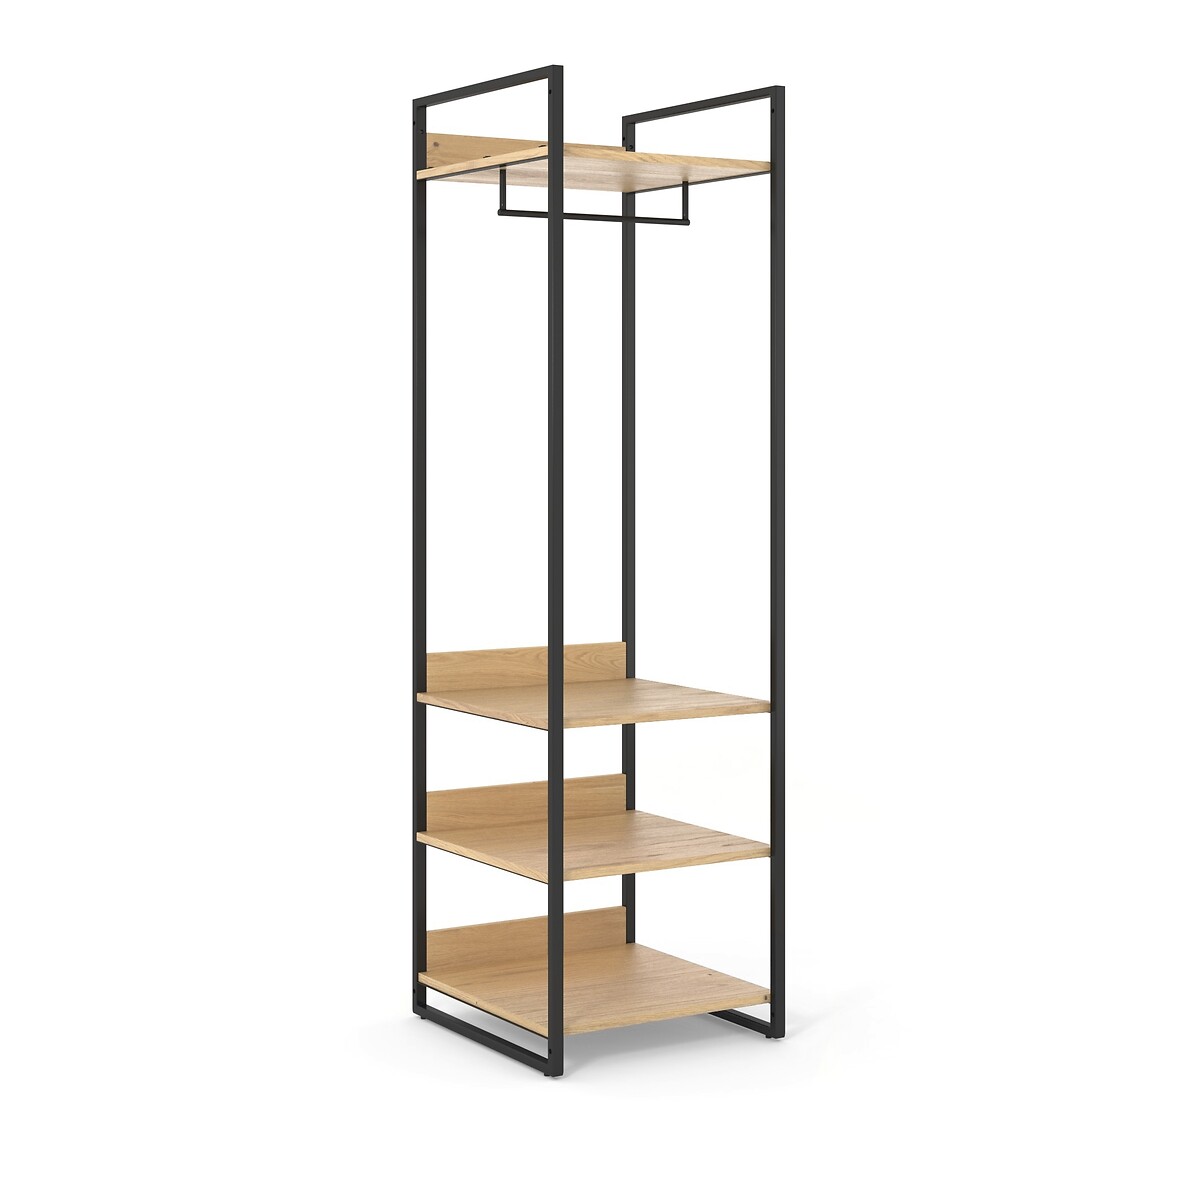 Hiba Modular Wardrobe Unit with 3 Shelves & a Hanging Rail